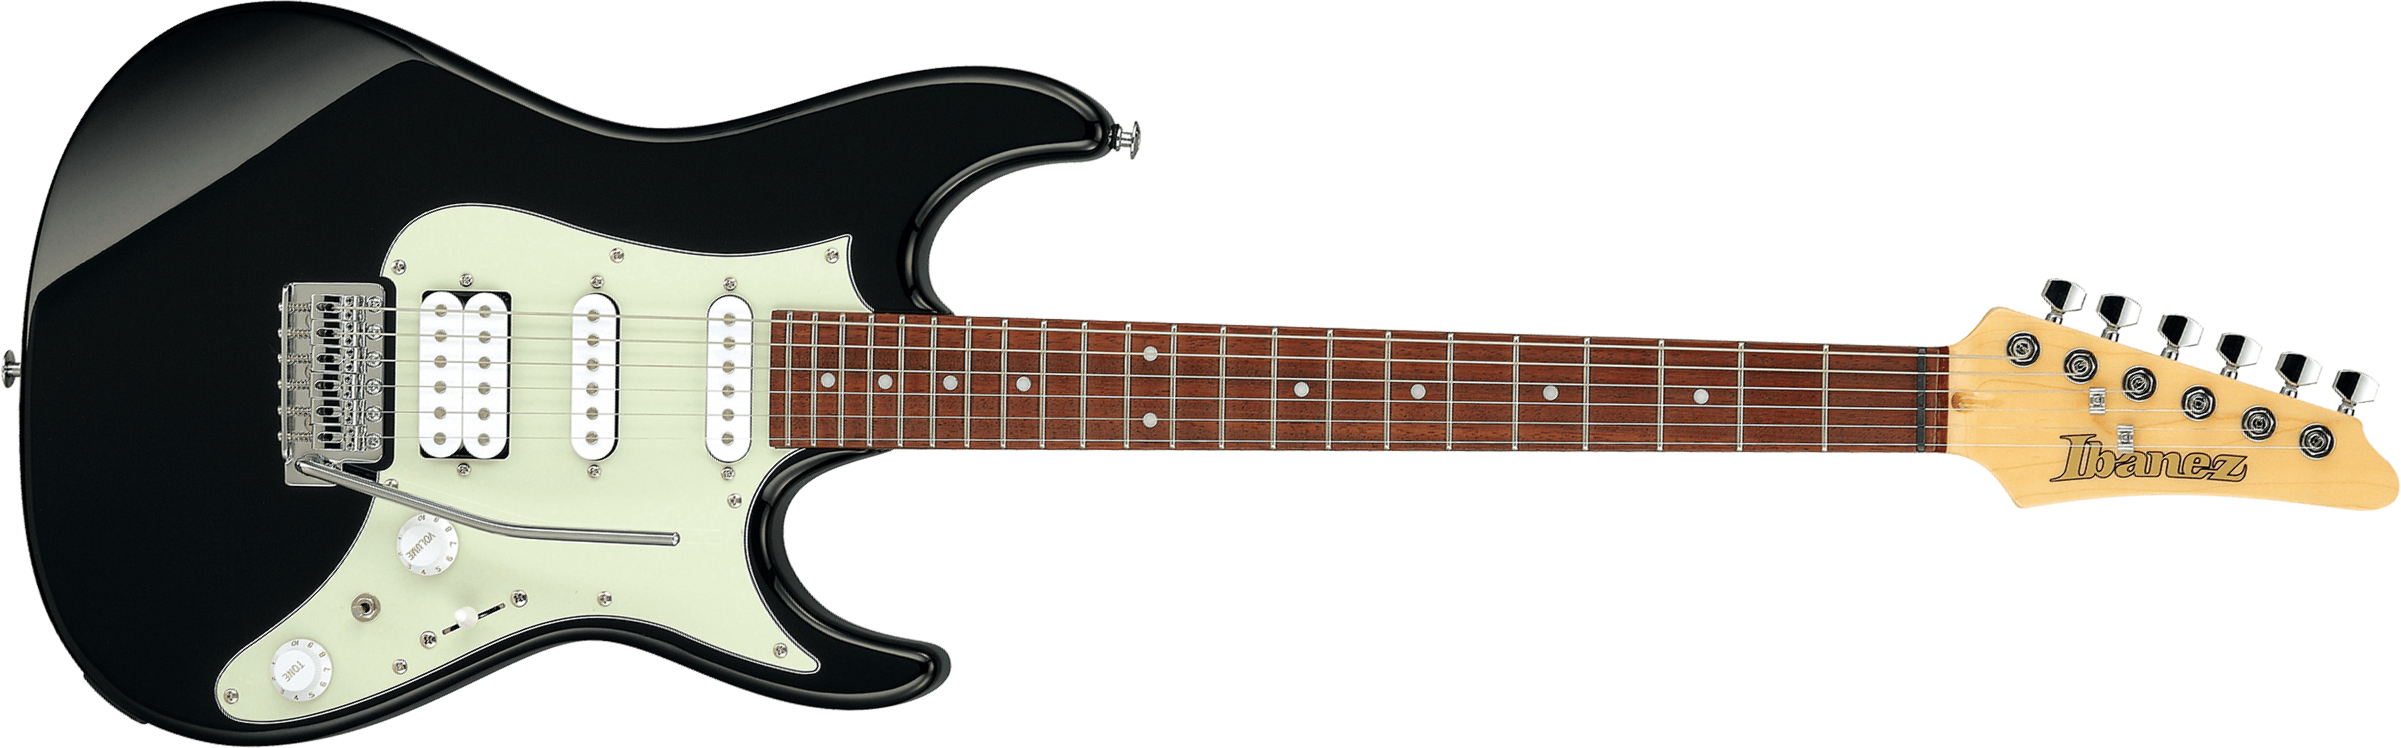 Ibanez Azes 40 Bk Standard Hss Trem Jat - Black - Elektrische gitaar in Str-vorm - Main picture